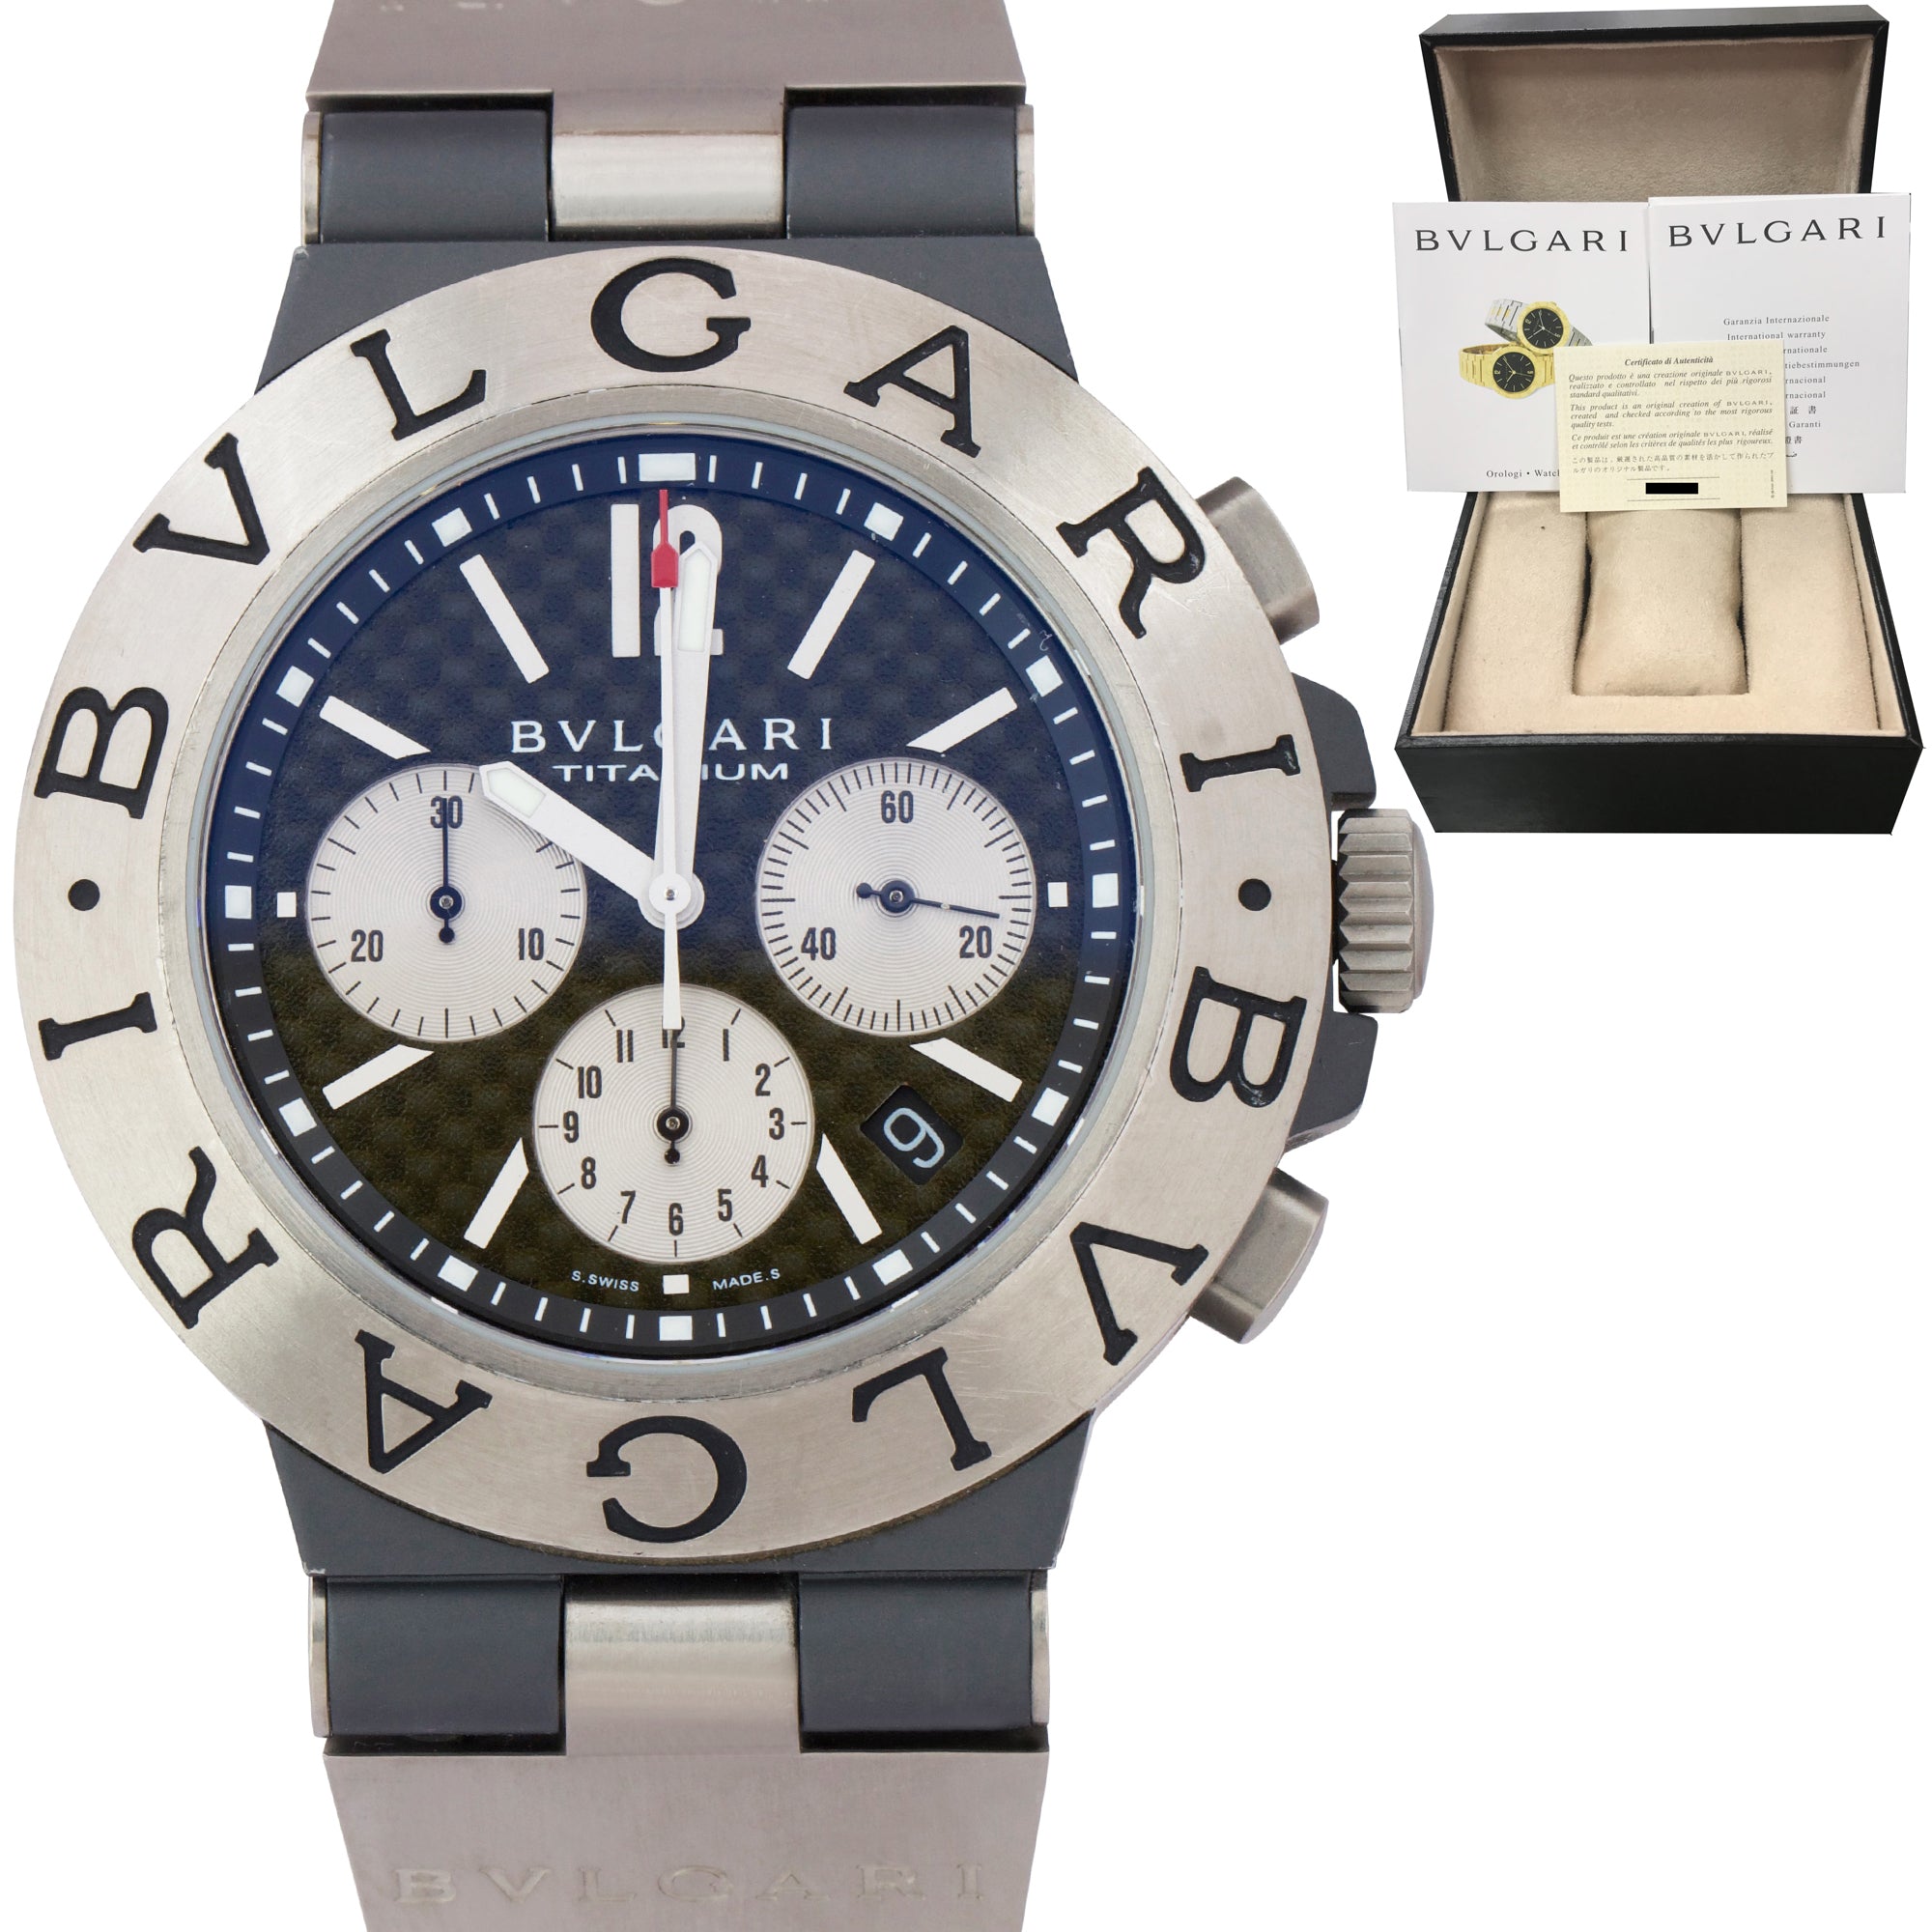 BVLGARI Diagono Titanium 44mm Tapisserie Index Automatic Watch TI 44 TA CH